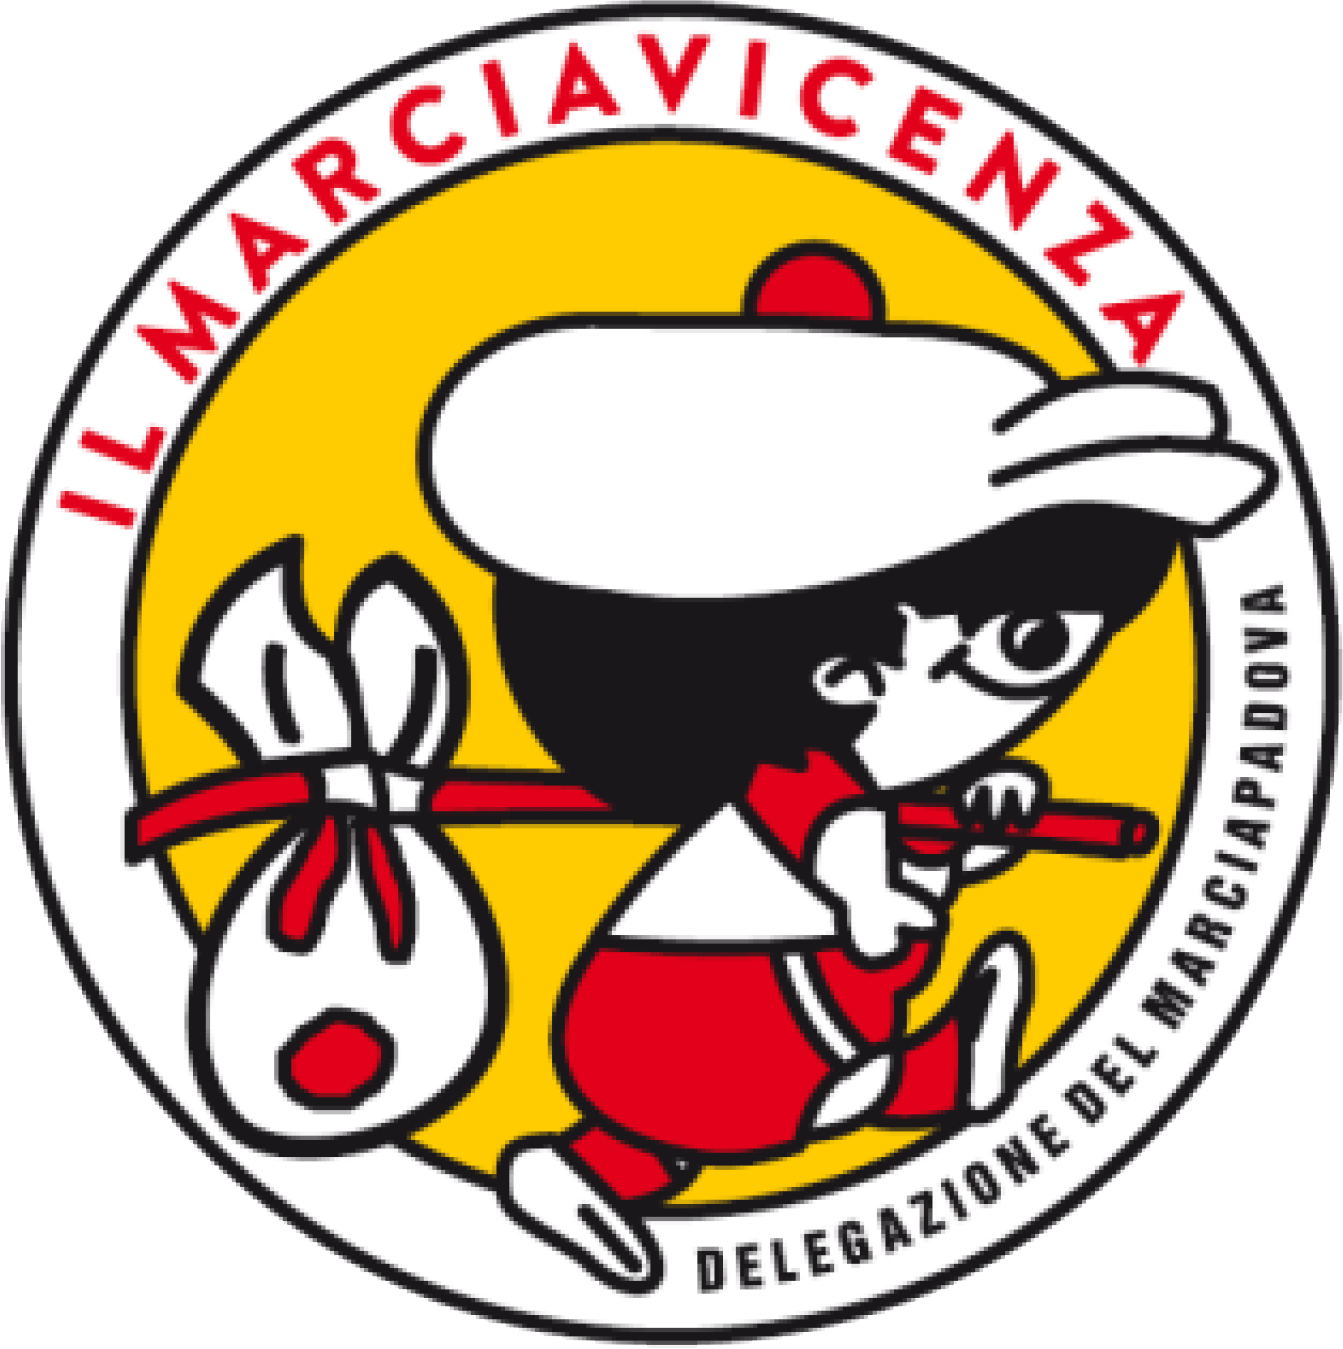 Logo-Marciavicenza-2.gif